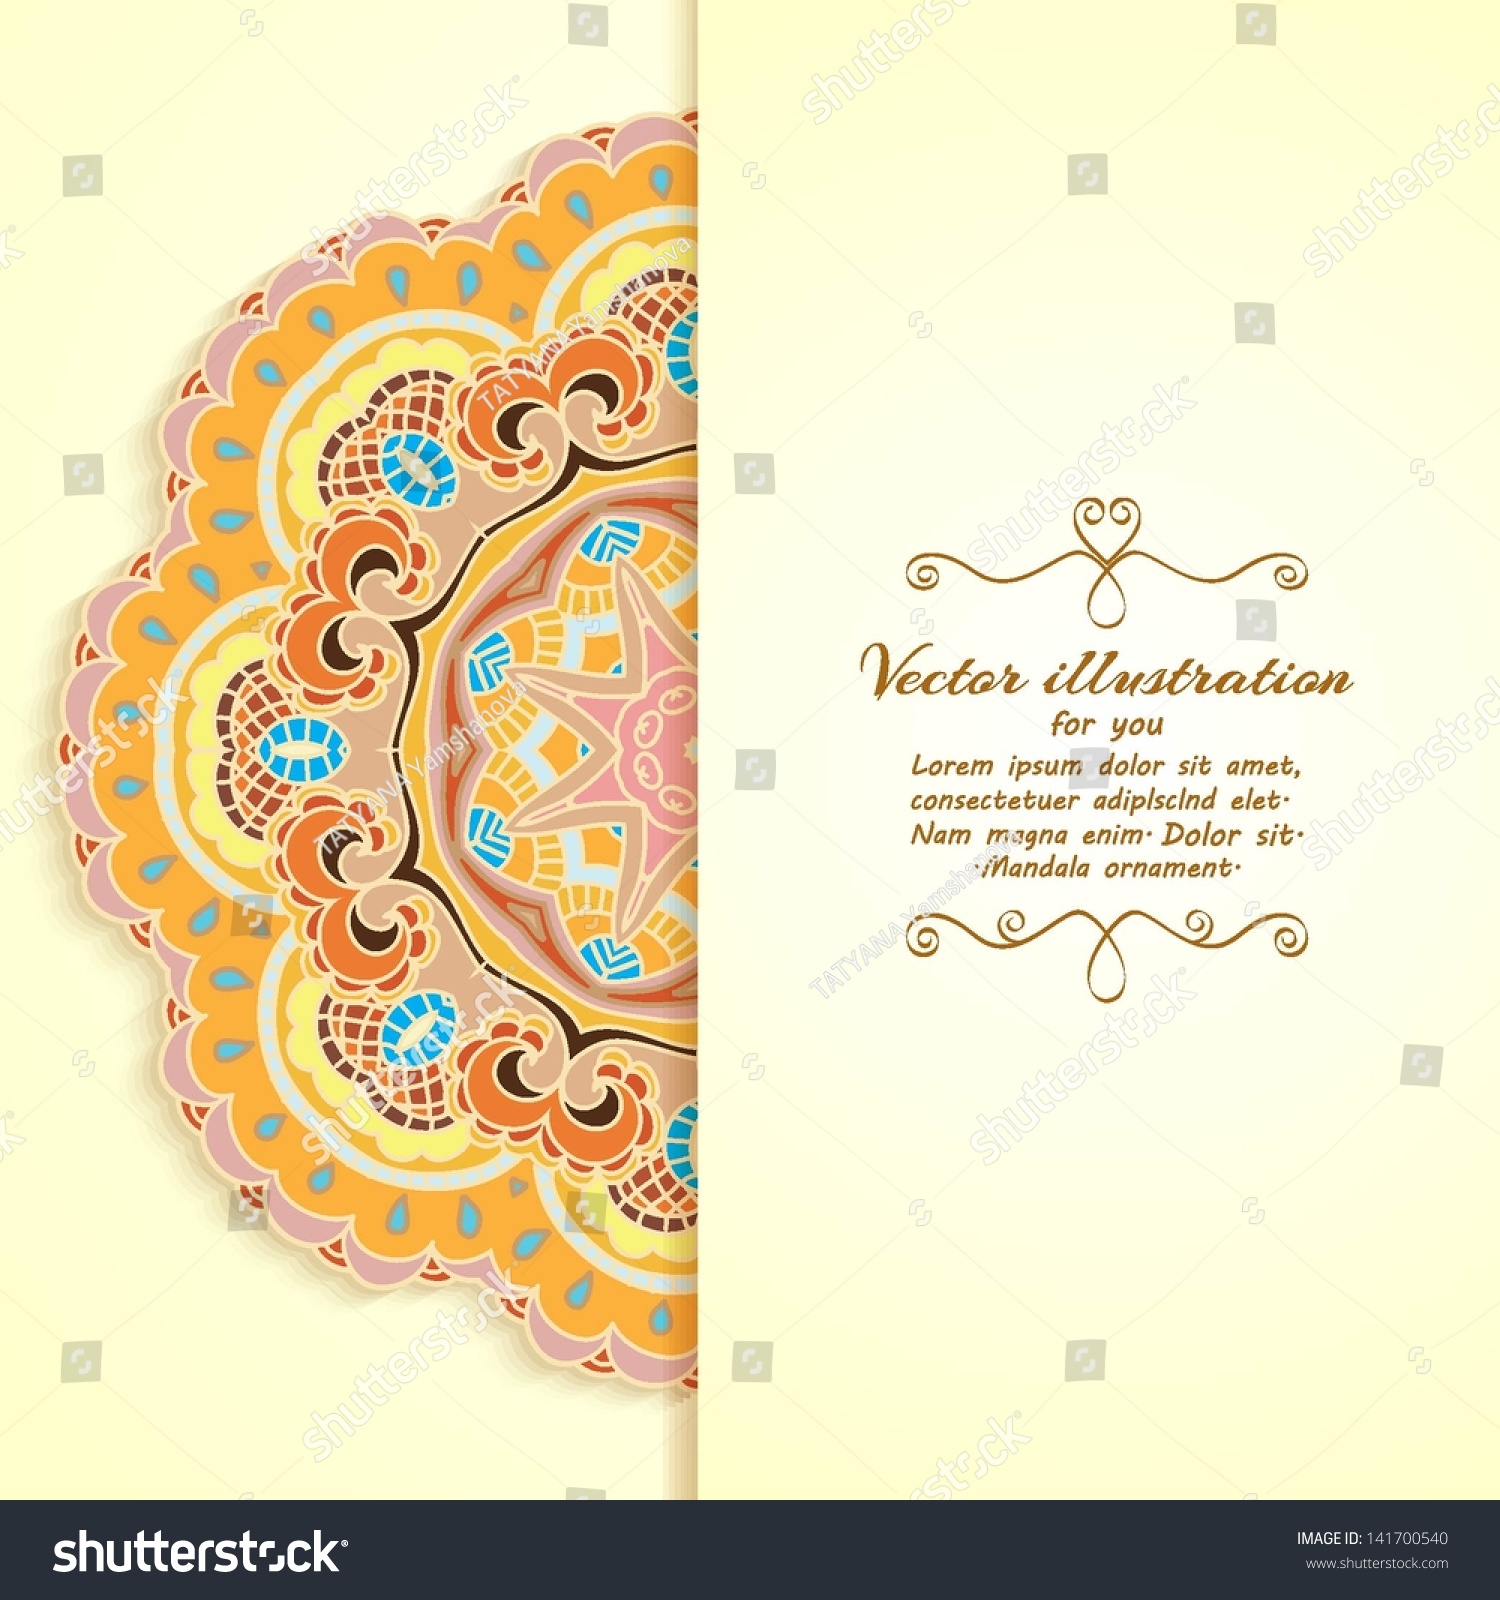 Indian wedding invitations vector